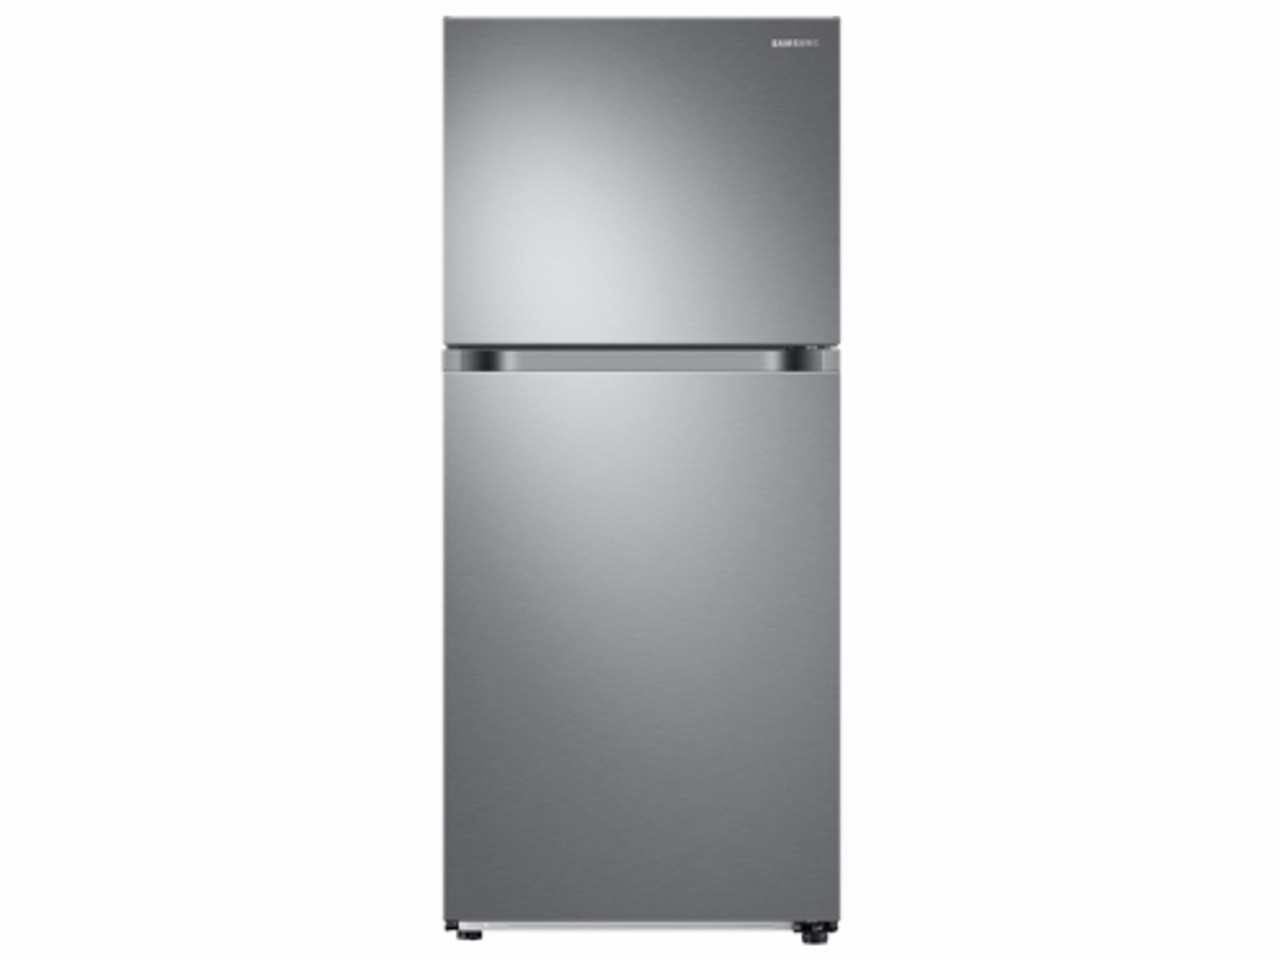 Samsung RT18M6215SR - 17.6 cu. ft. Top-Freezer Refrigerator with FlexZone - Stainless Steel